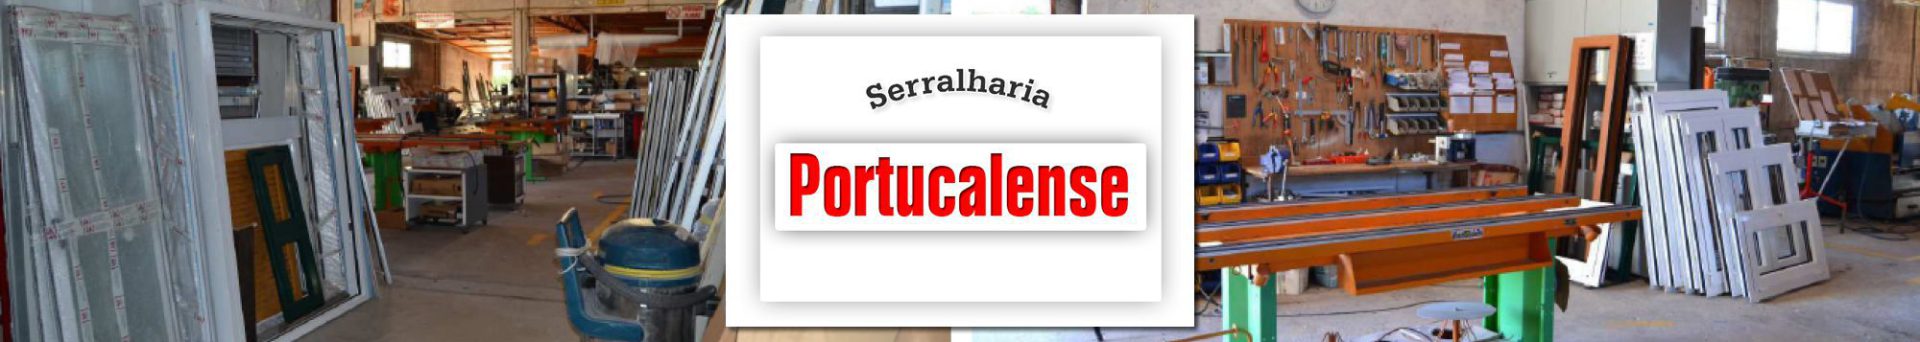 Serralharia - Portucalense